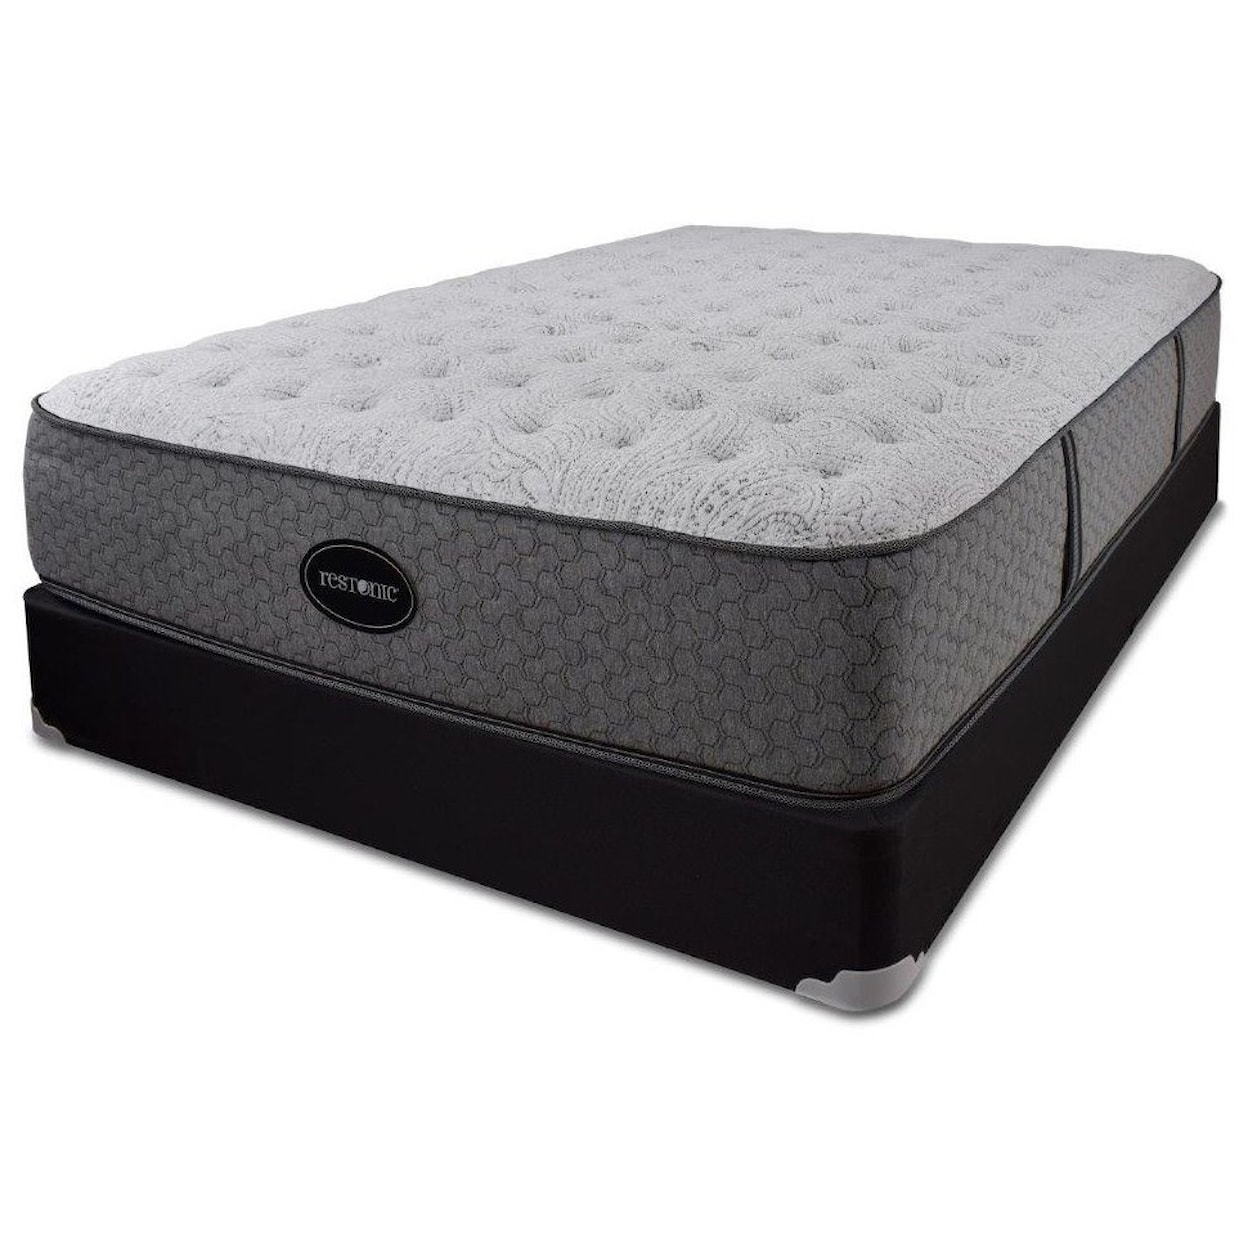 Restonic Blackcomb Cushion Firm King Comfort Firm Mattress Set